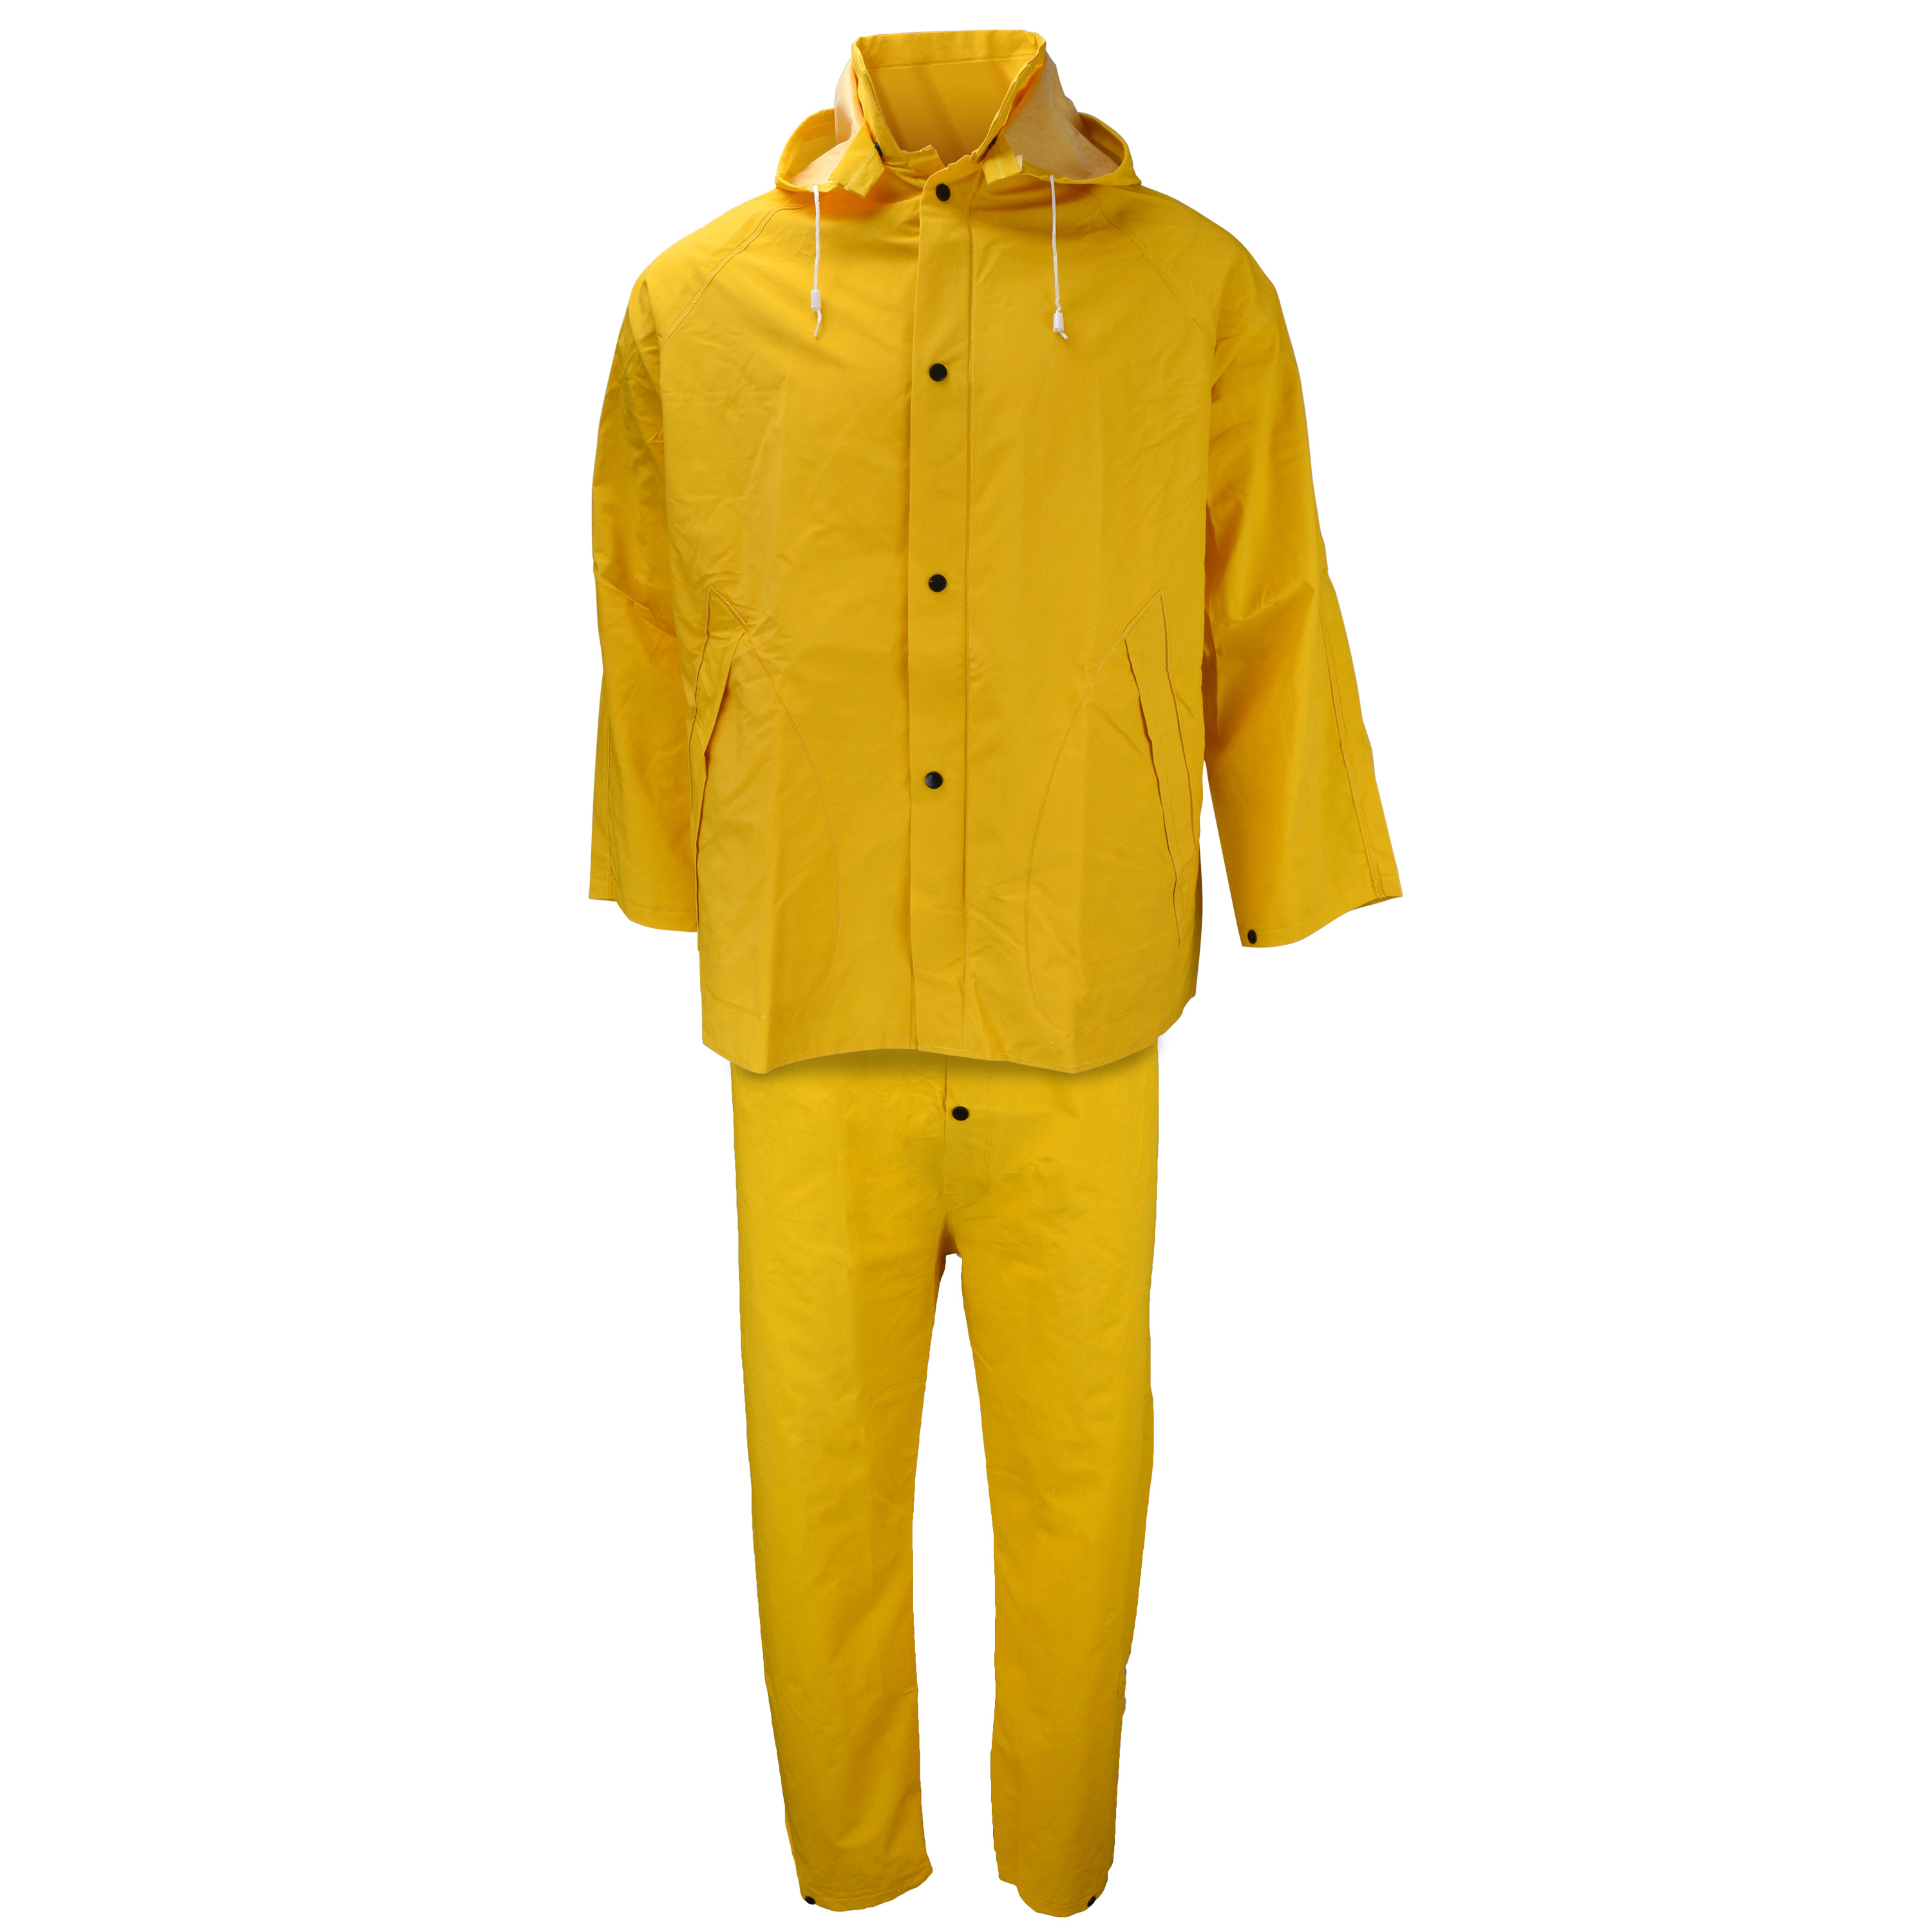 Economy Rain Suit - Safety Yellow - Size 4X